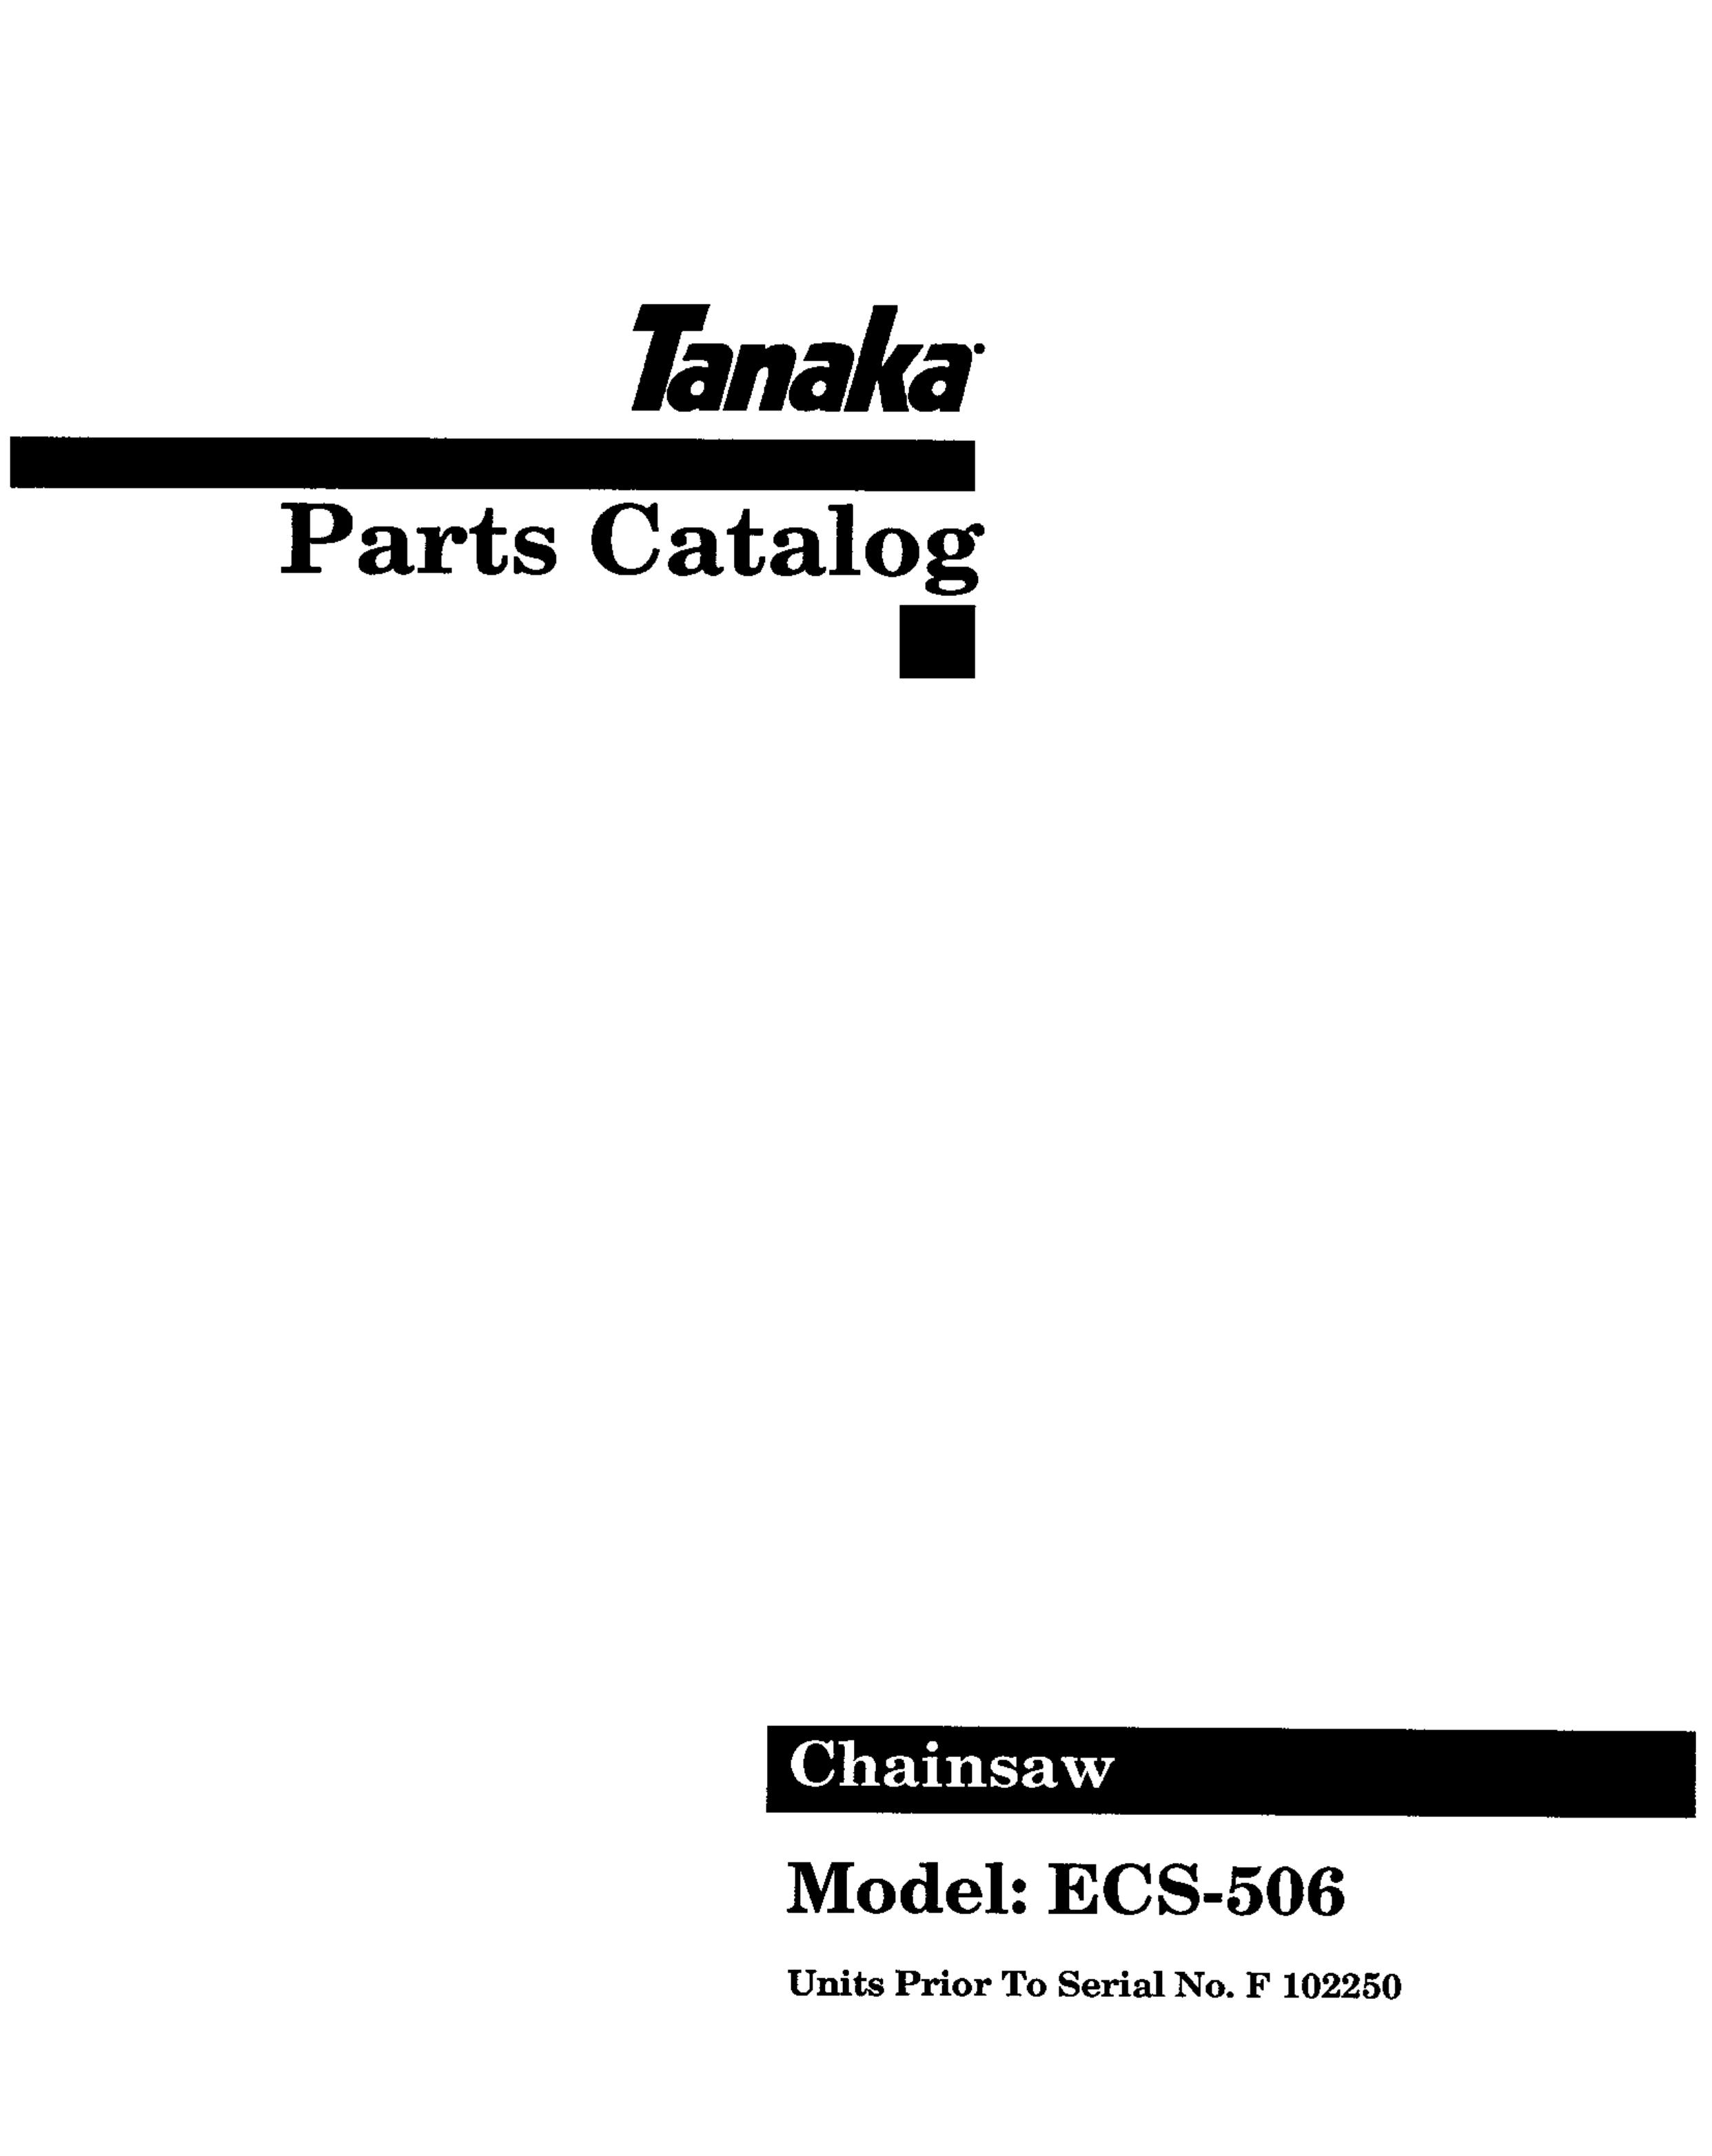 Tanaka ECS-506 Chainsaw User Manual